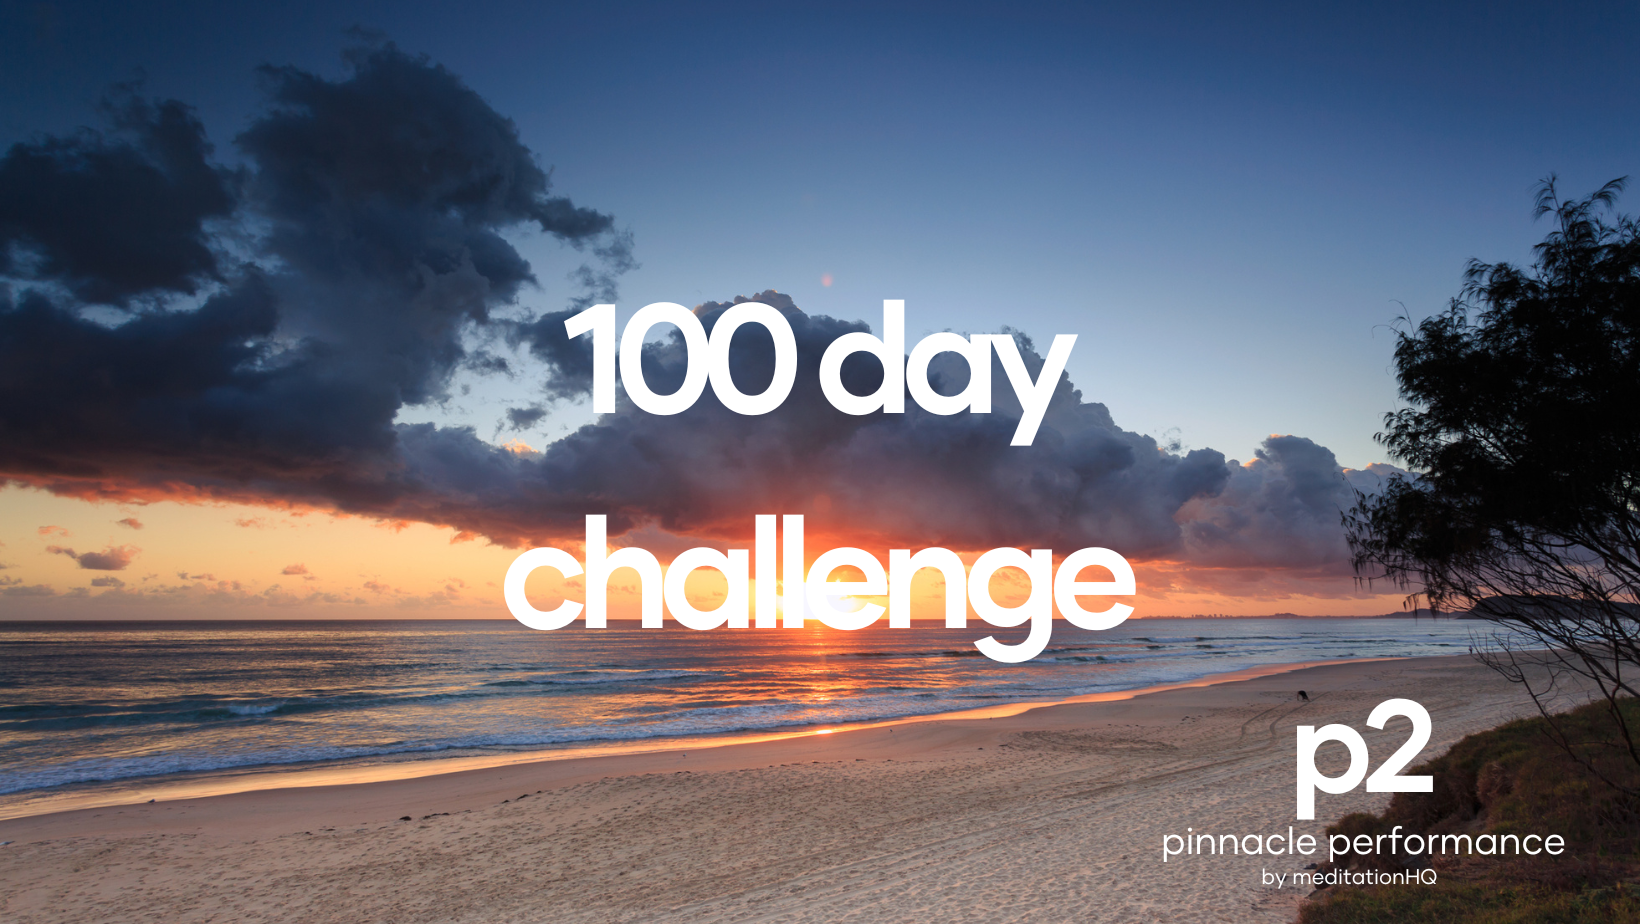 P2 Pinnacle Performance 100 Day Challenge